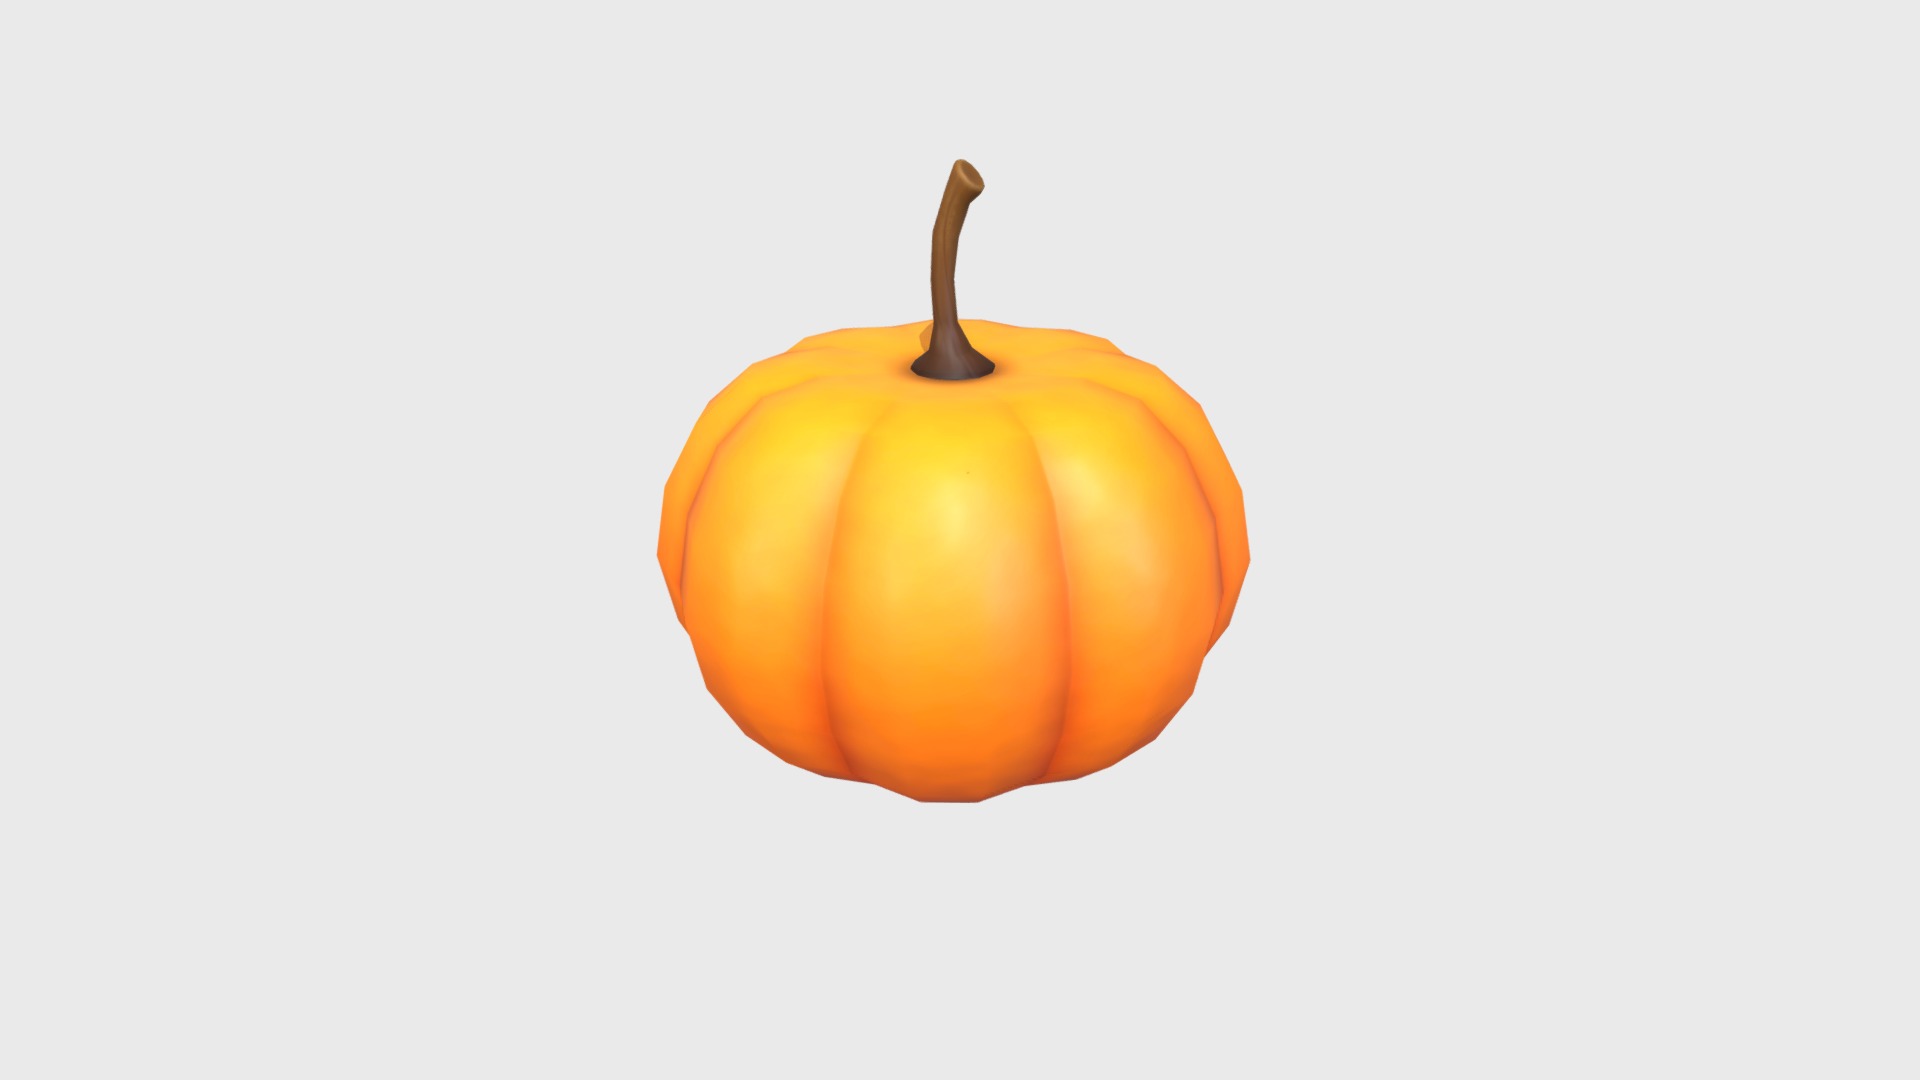 3D model Pumpkin - This is a 3D model of the Pumpkin. The 3D model is about a yellow pumpkin with a stem.